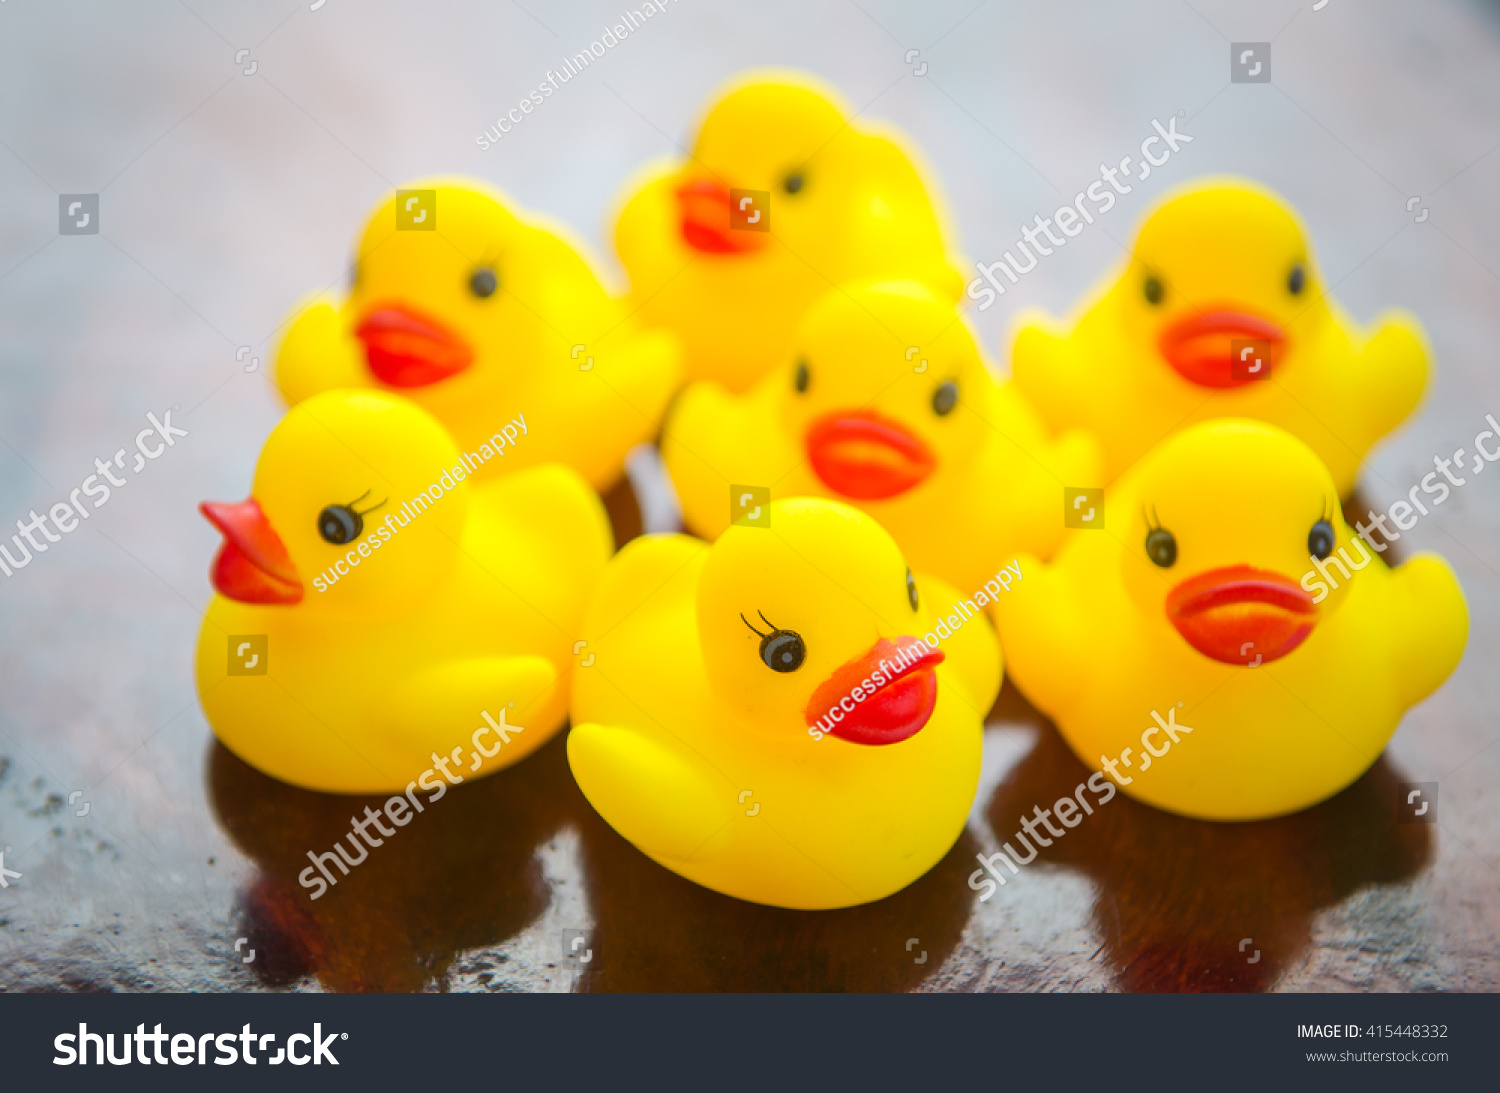 duck dolls